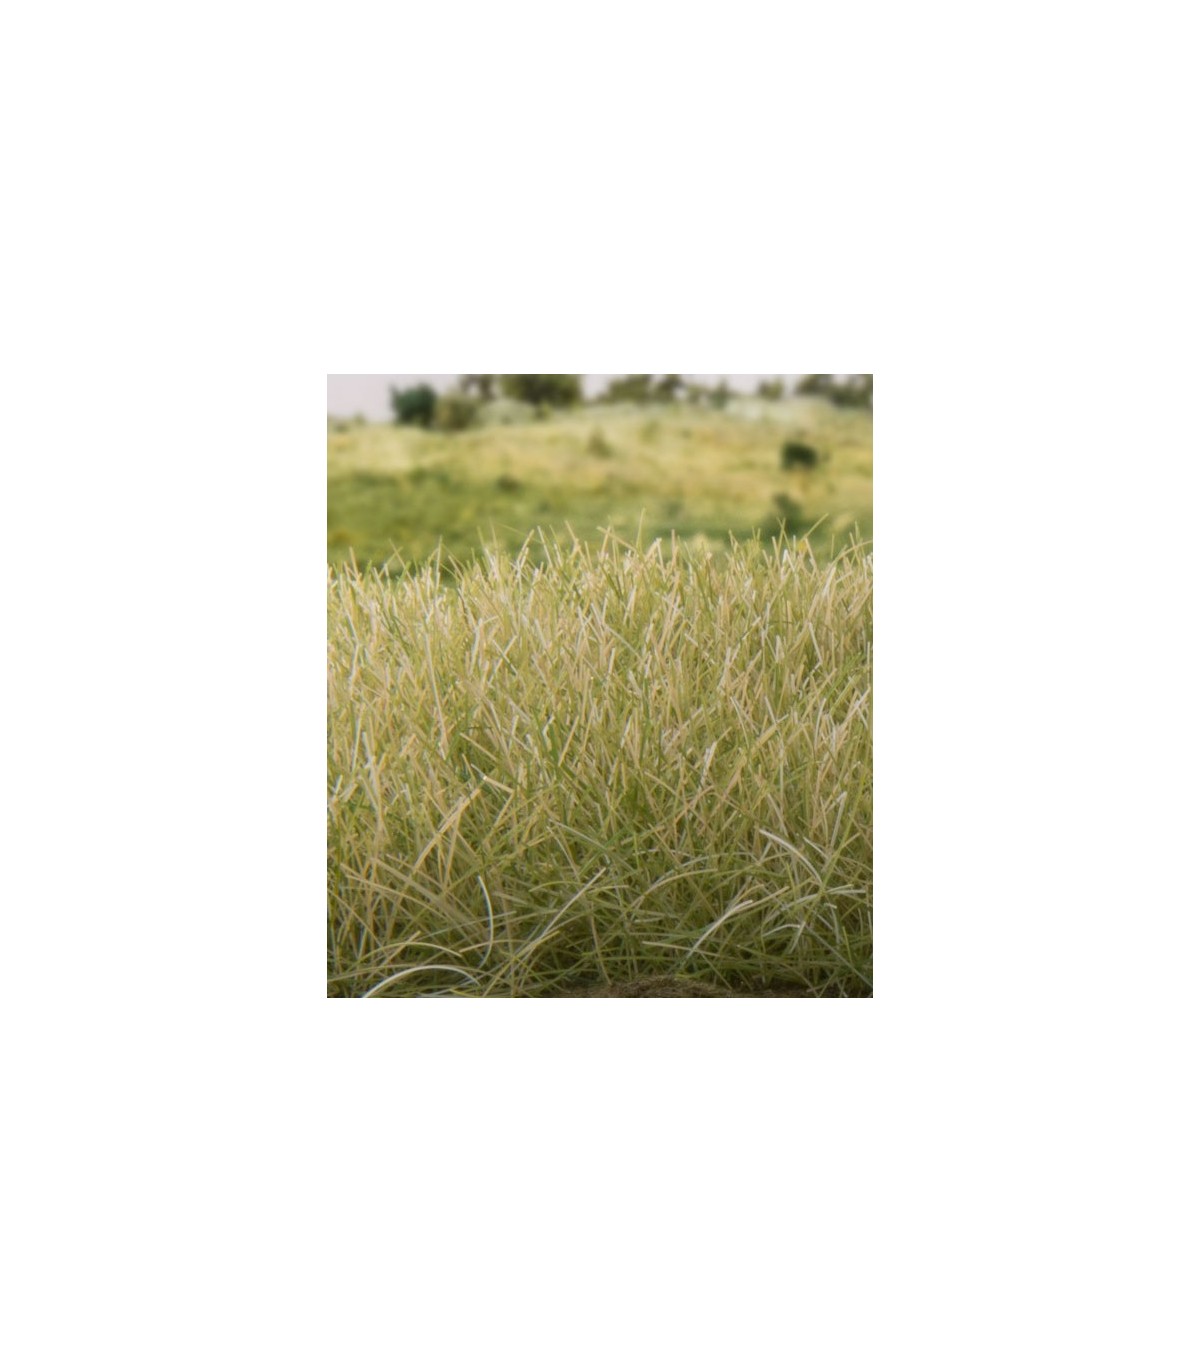 Woodland Scenics 4 mm Static Grass - Light Green